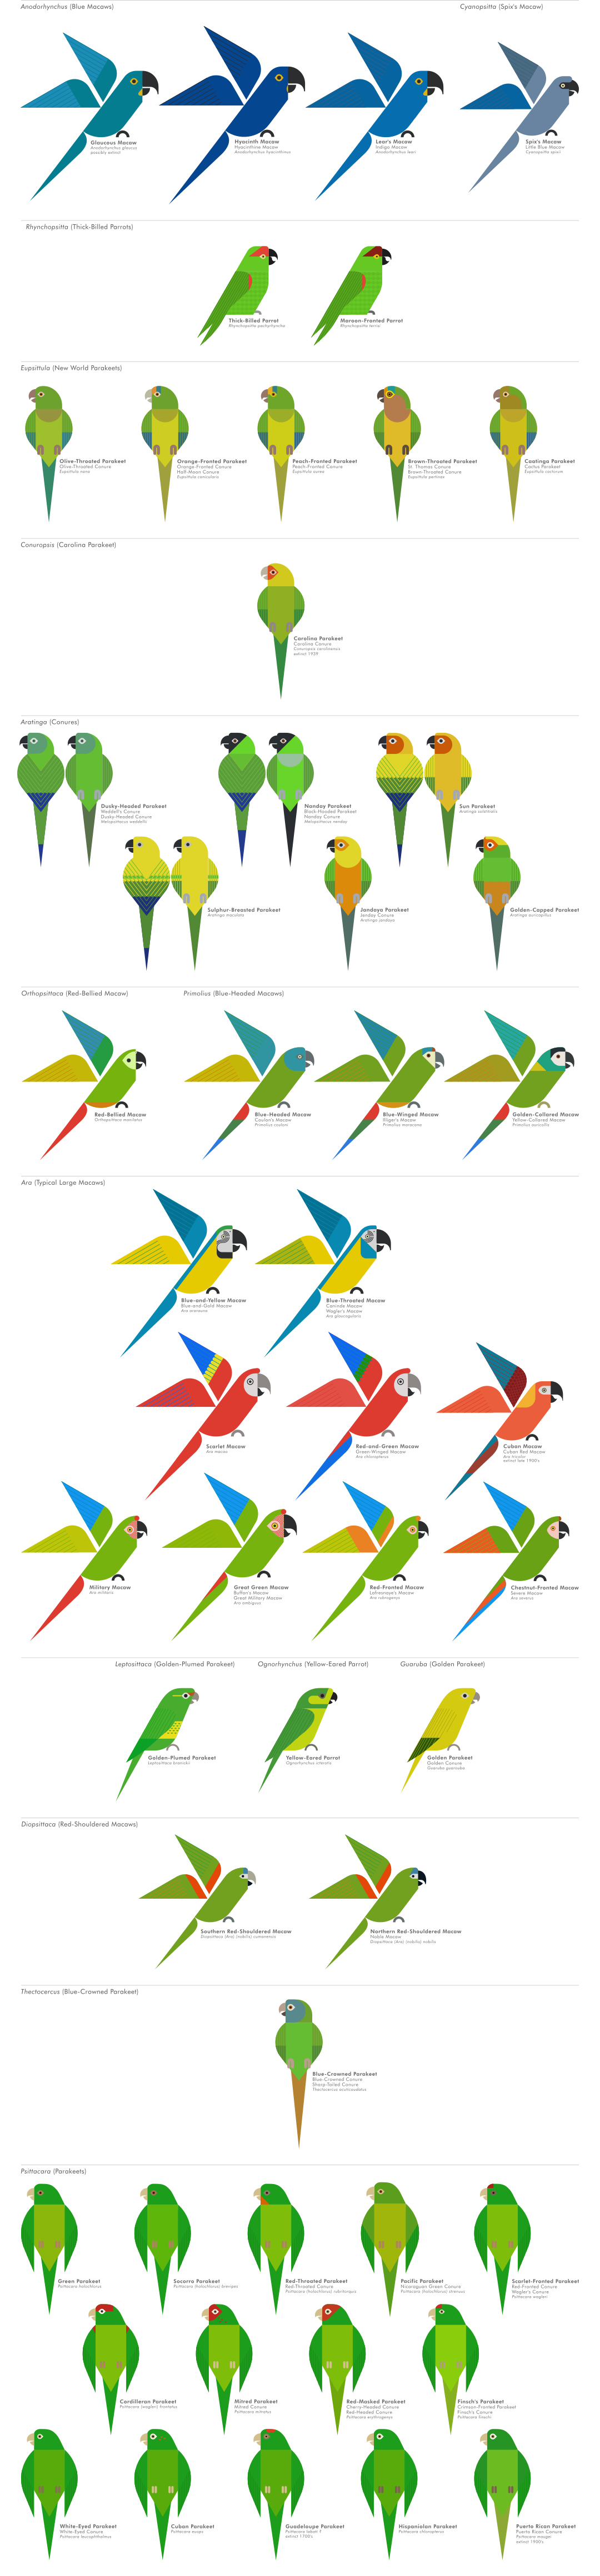 scott partridge - ave - avian vector encyclopedia - parrots - vector bird art